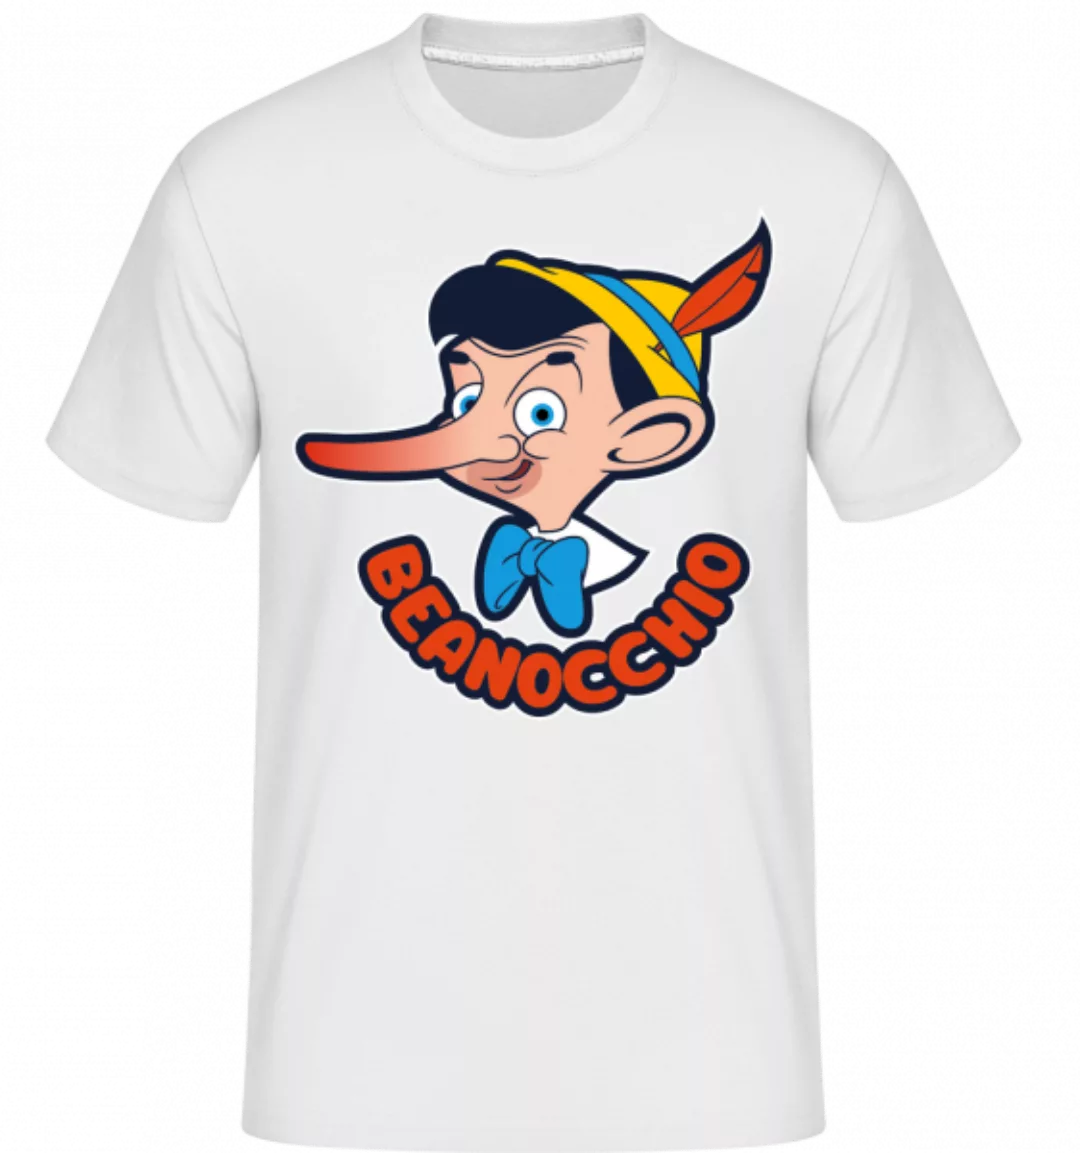 Beanocchio · Shirtinator Männer T-Shirt günstig online kaufen